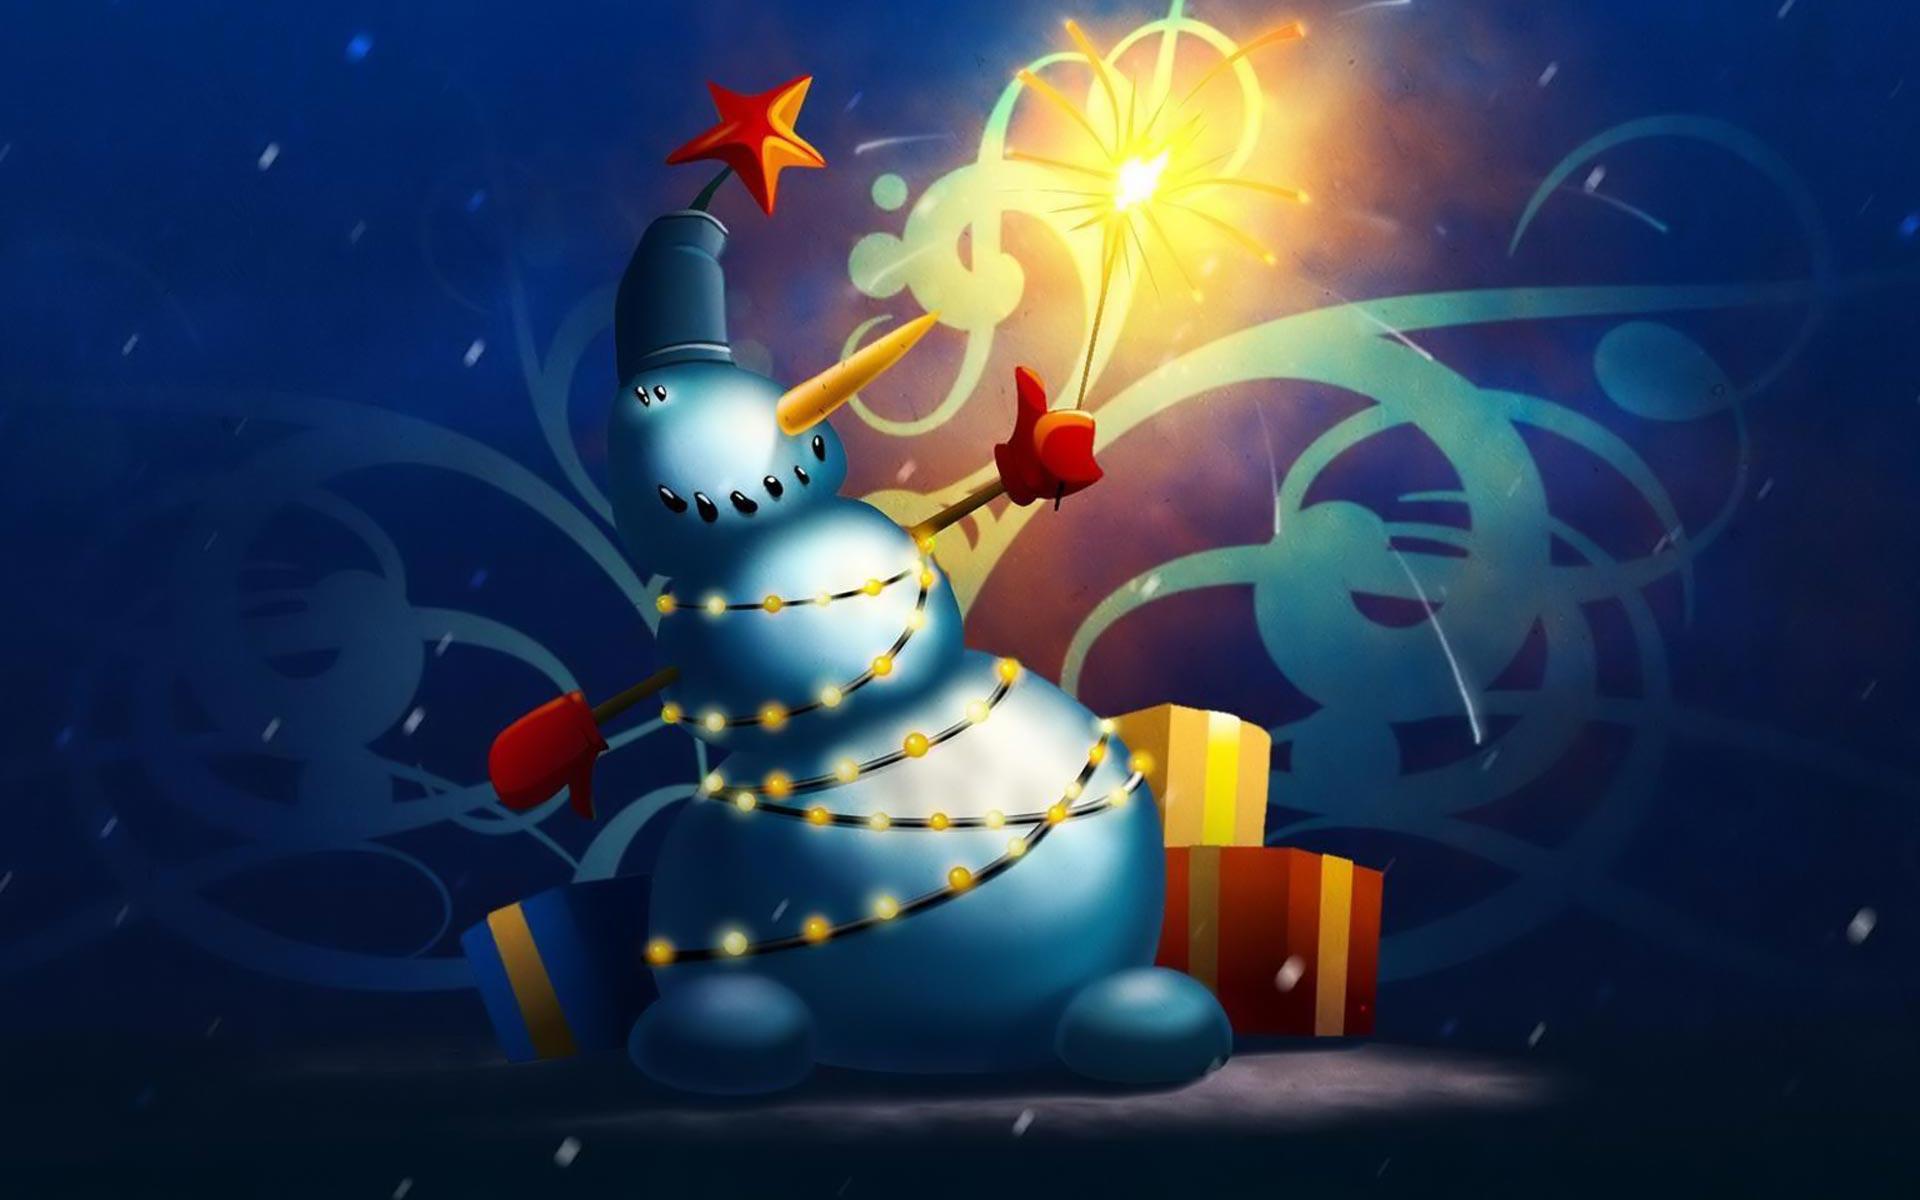 image For > Cute Christmas Desktop Background